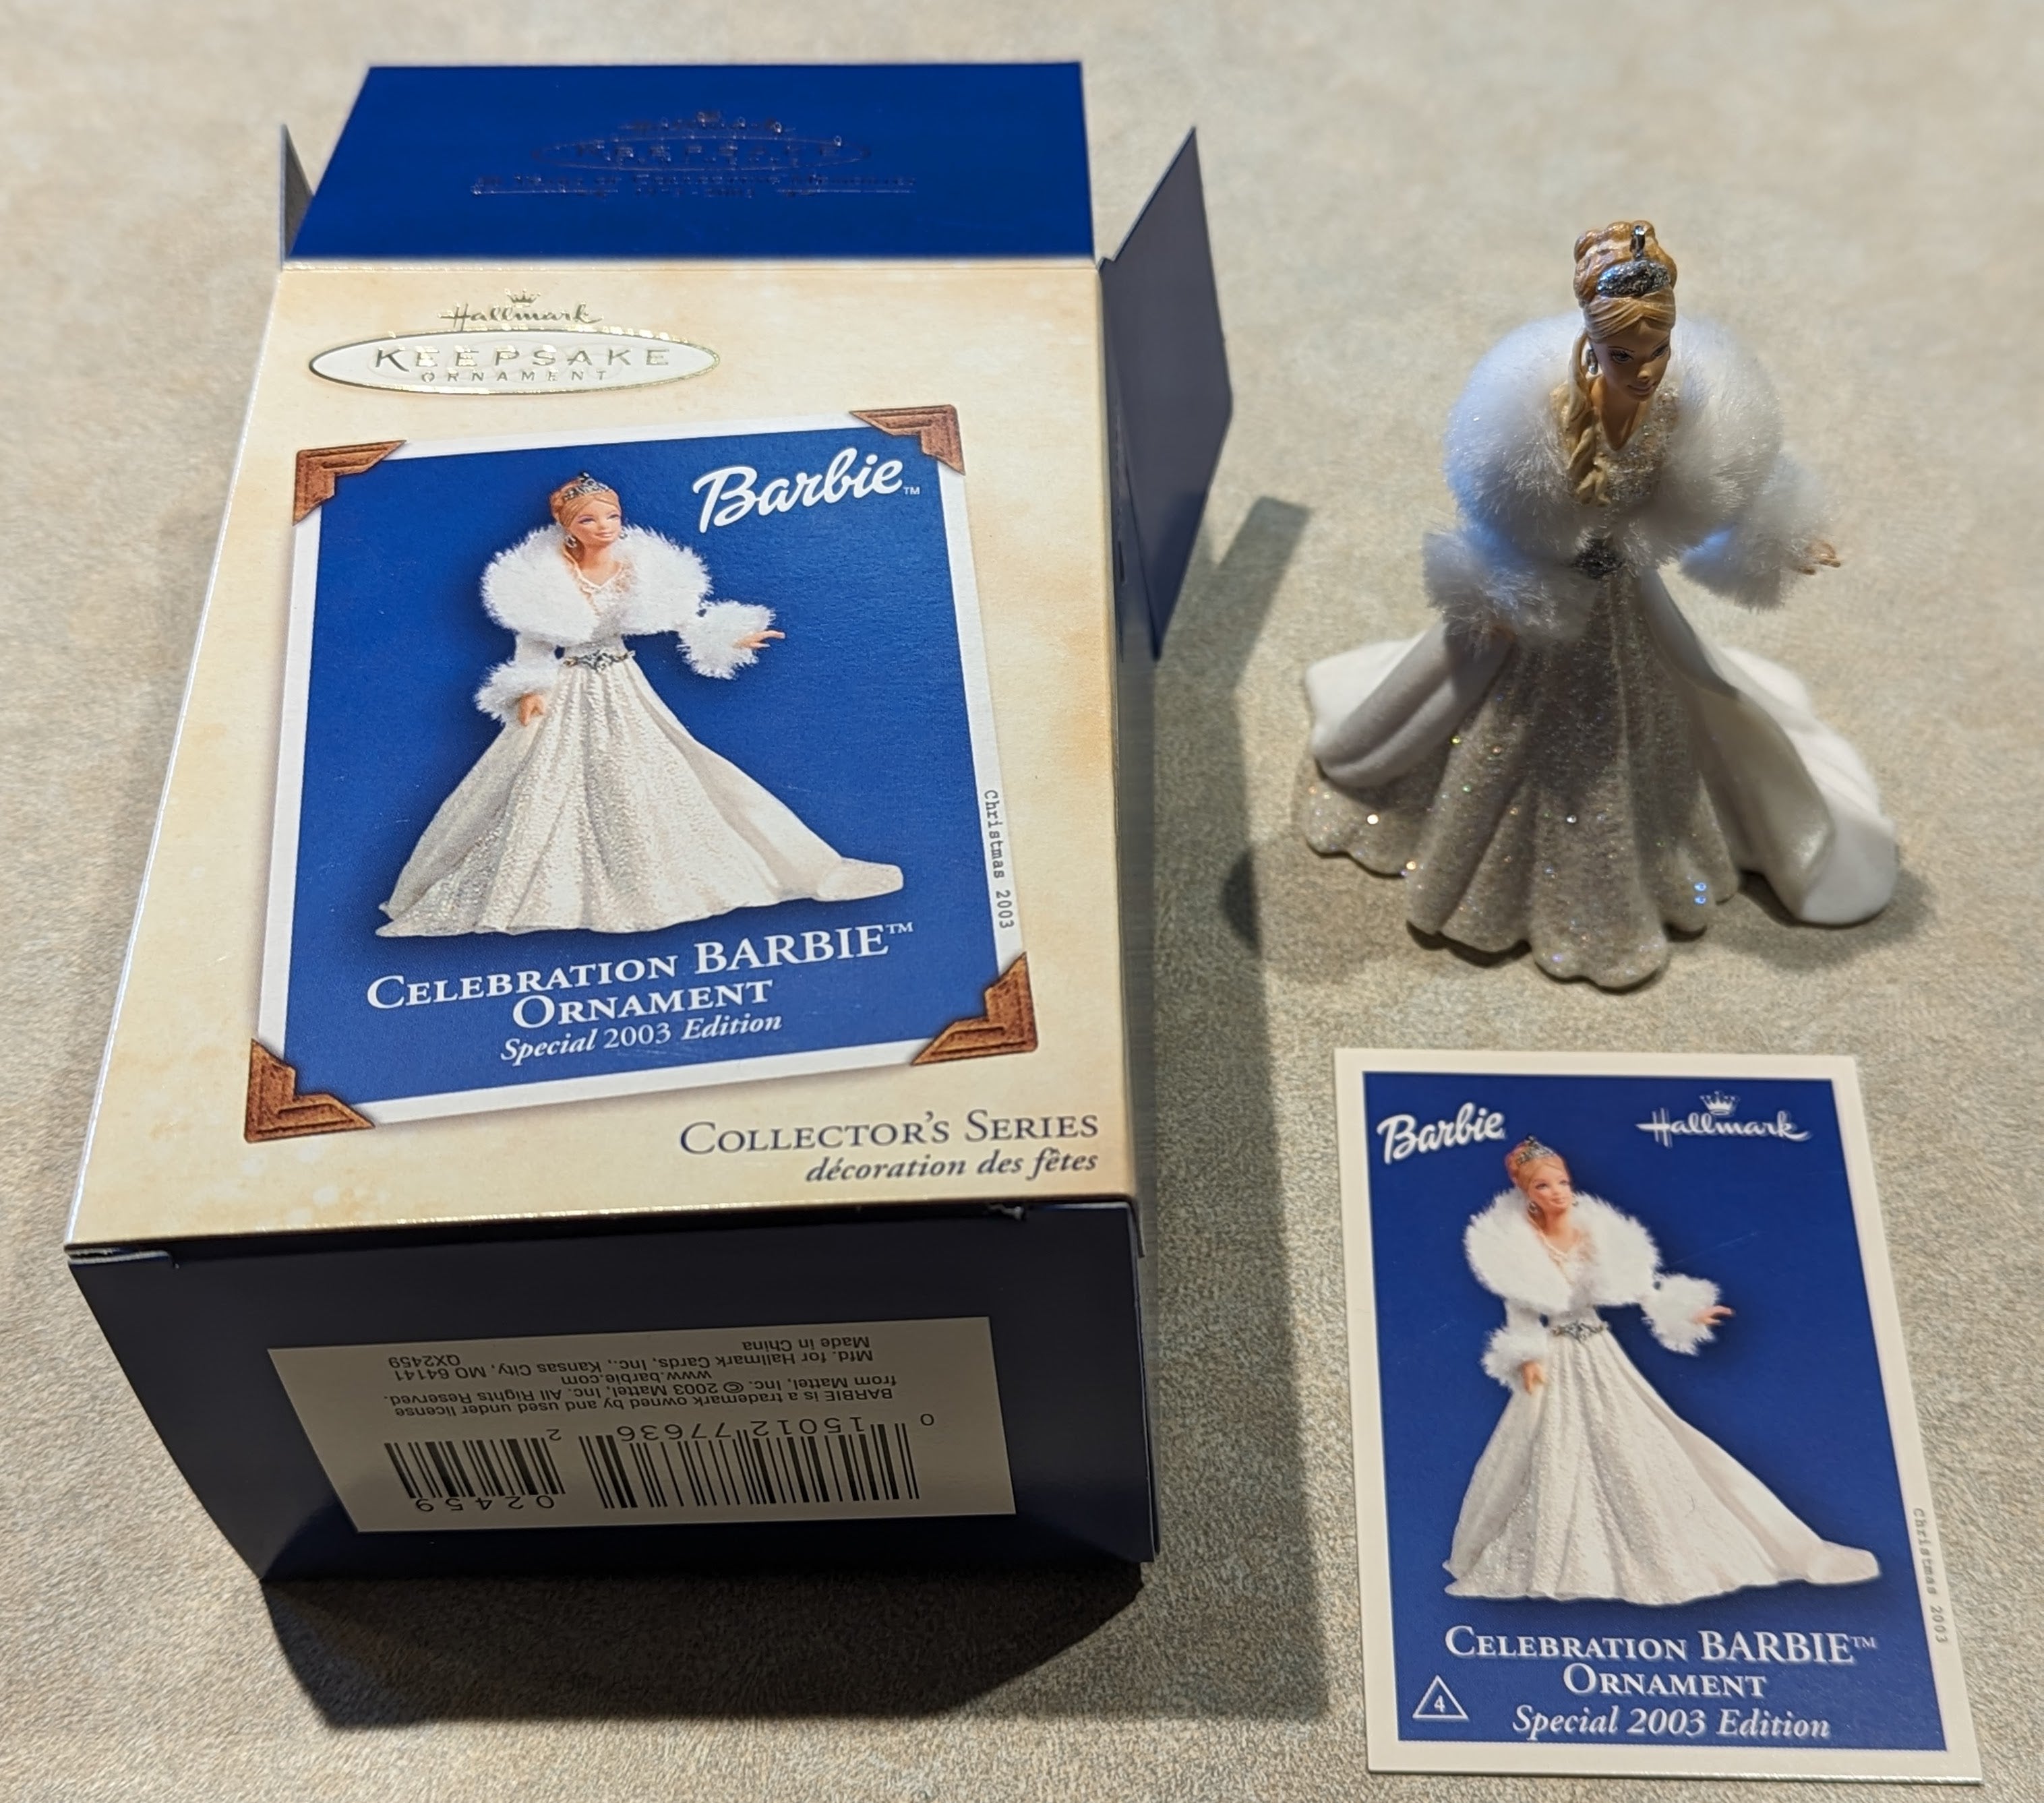 Hallmark Ornament 2003 Celebration Barbie 4th Edition with Collector Card